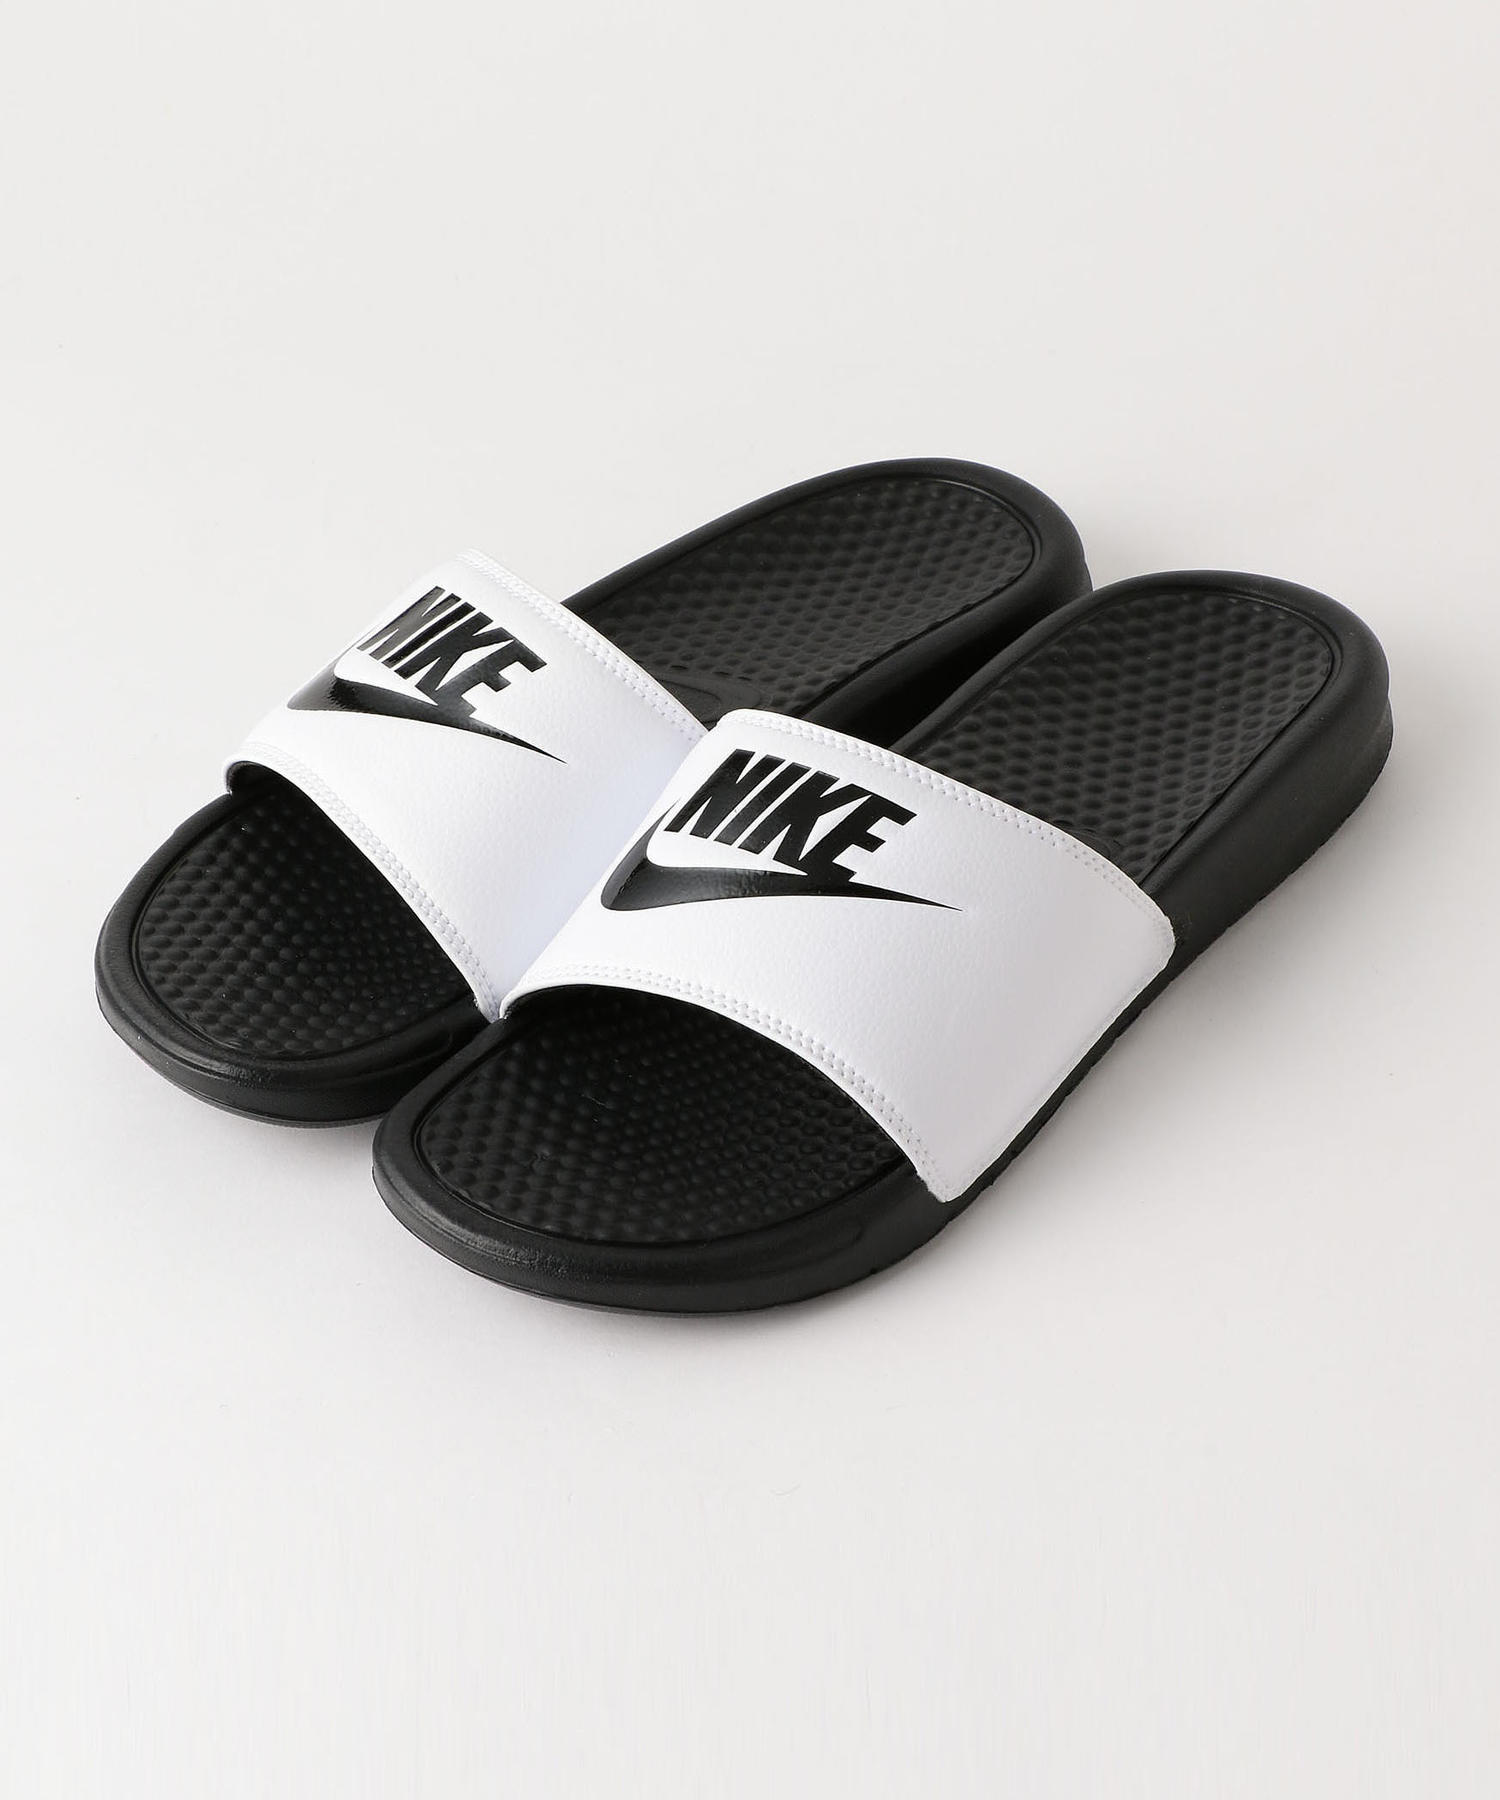 Pin by keniichi on Fashion 時裝 | Shoes, Sandals, Pool slides